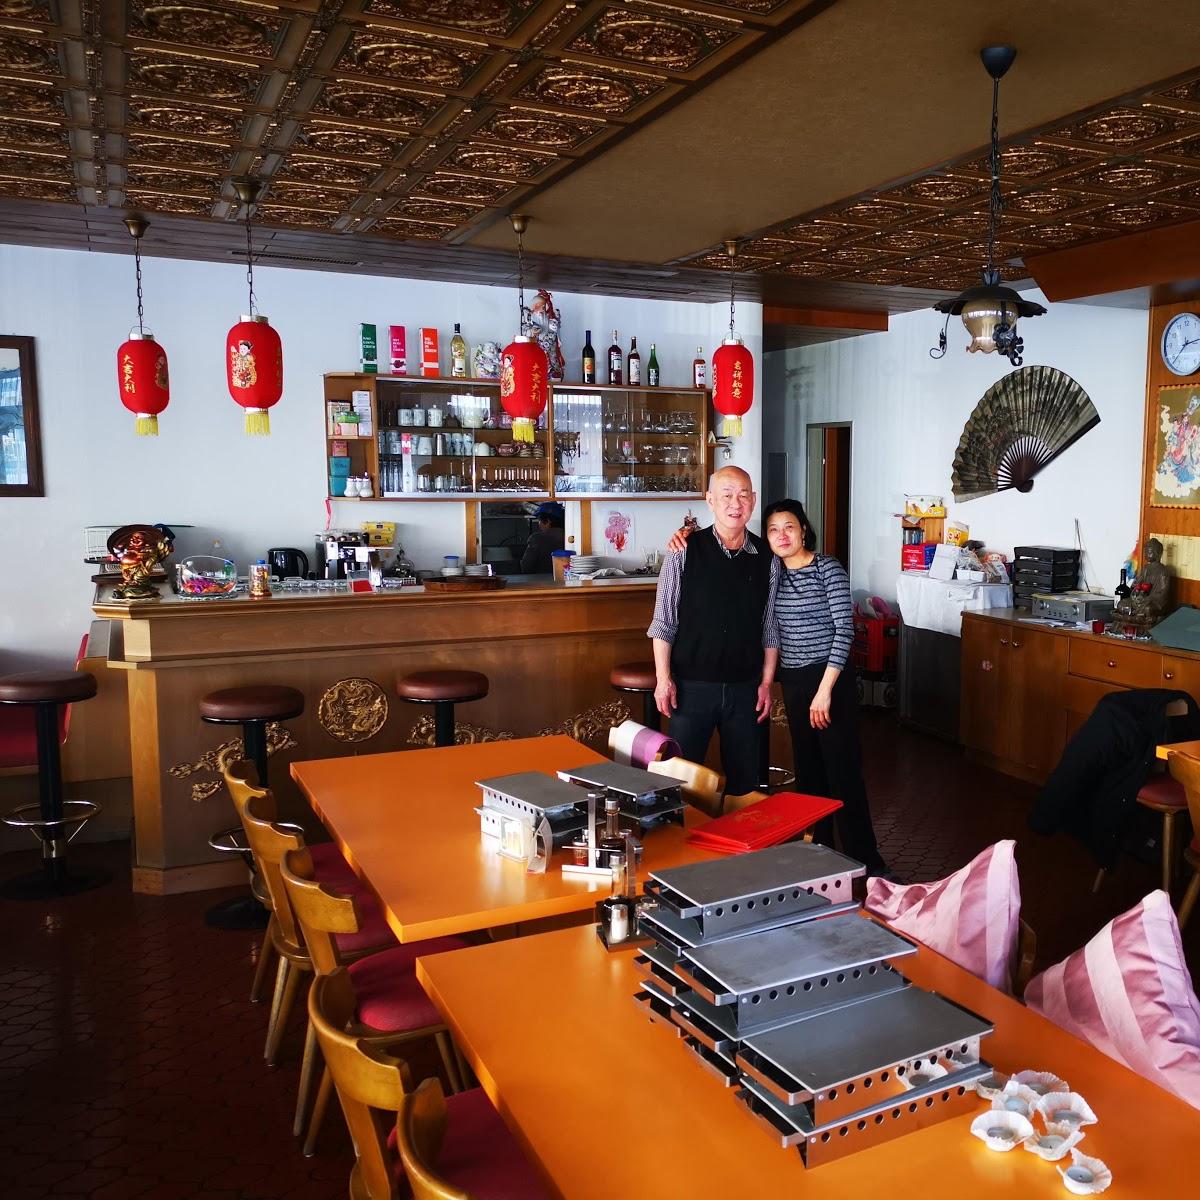 Restaurant "China Restaurant Palace" in Landeck